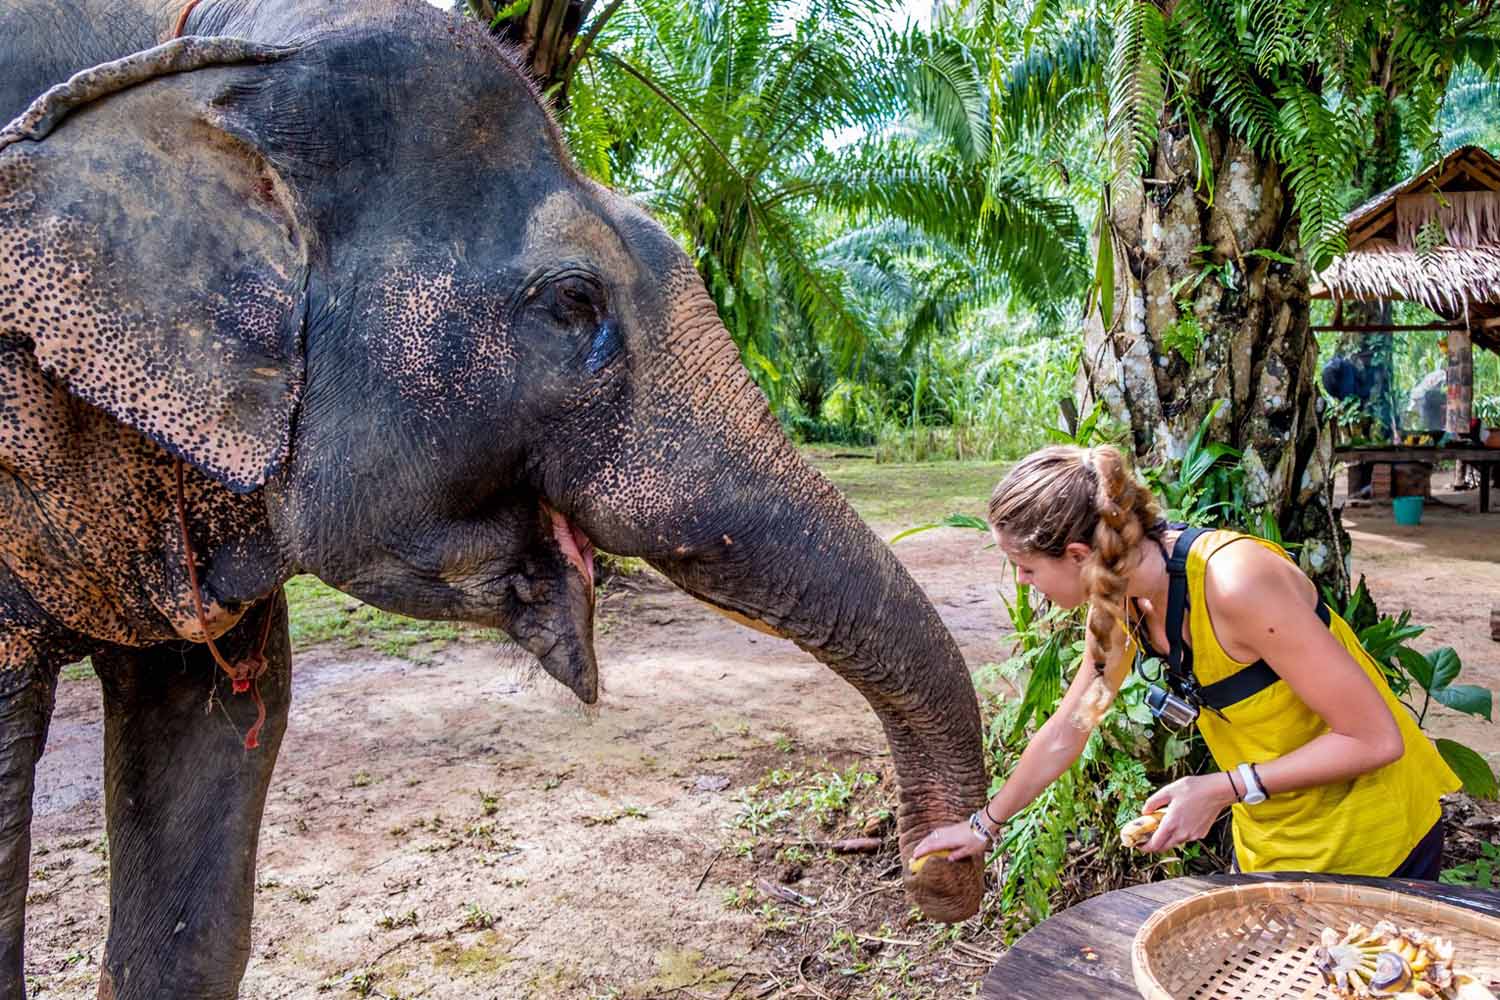 Feeding an elephant